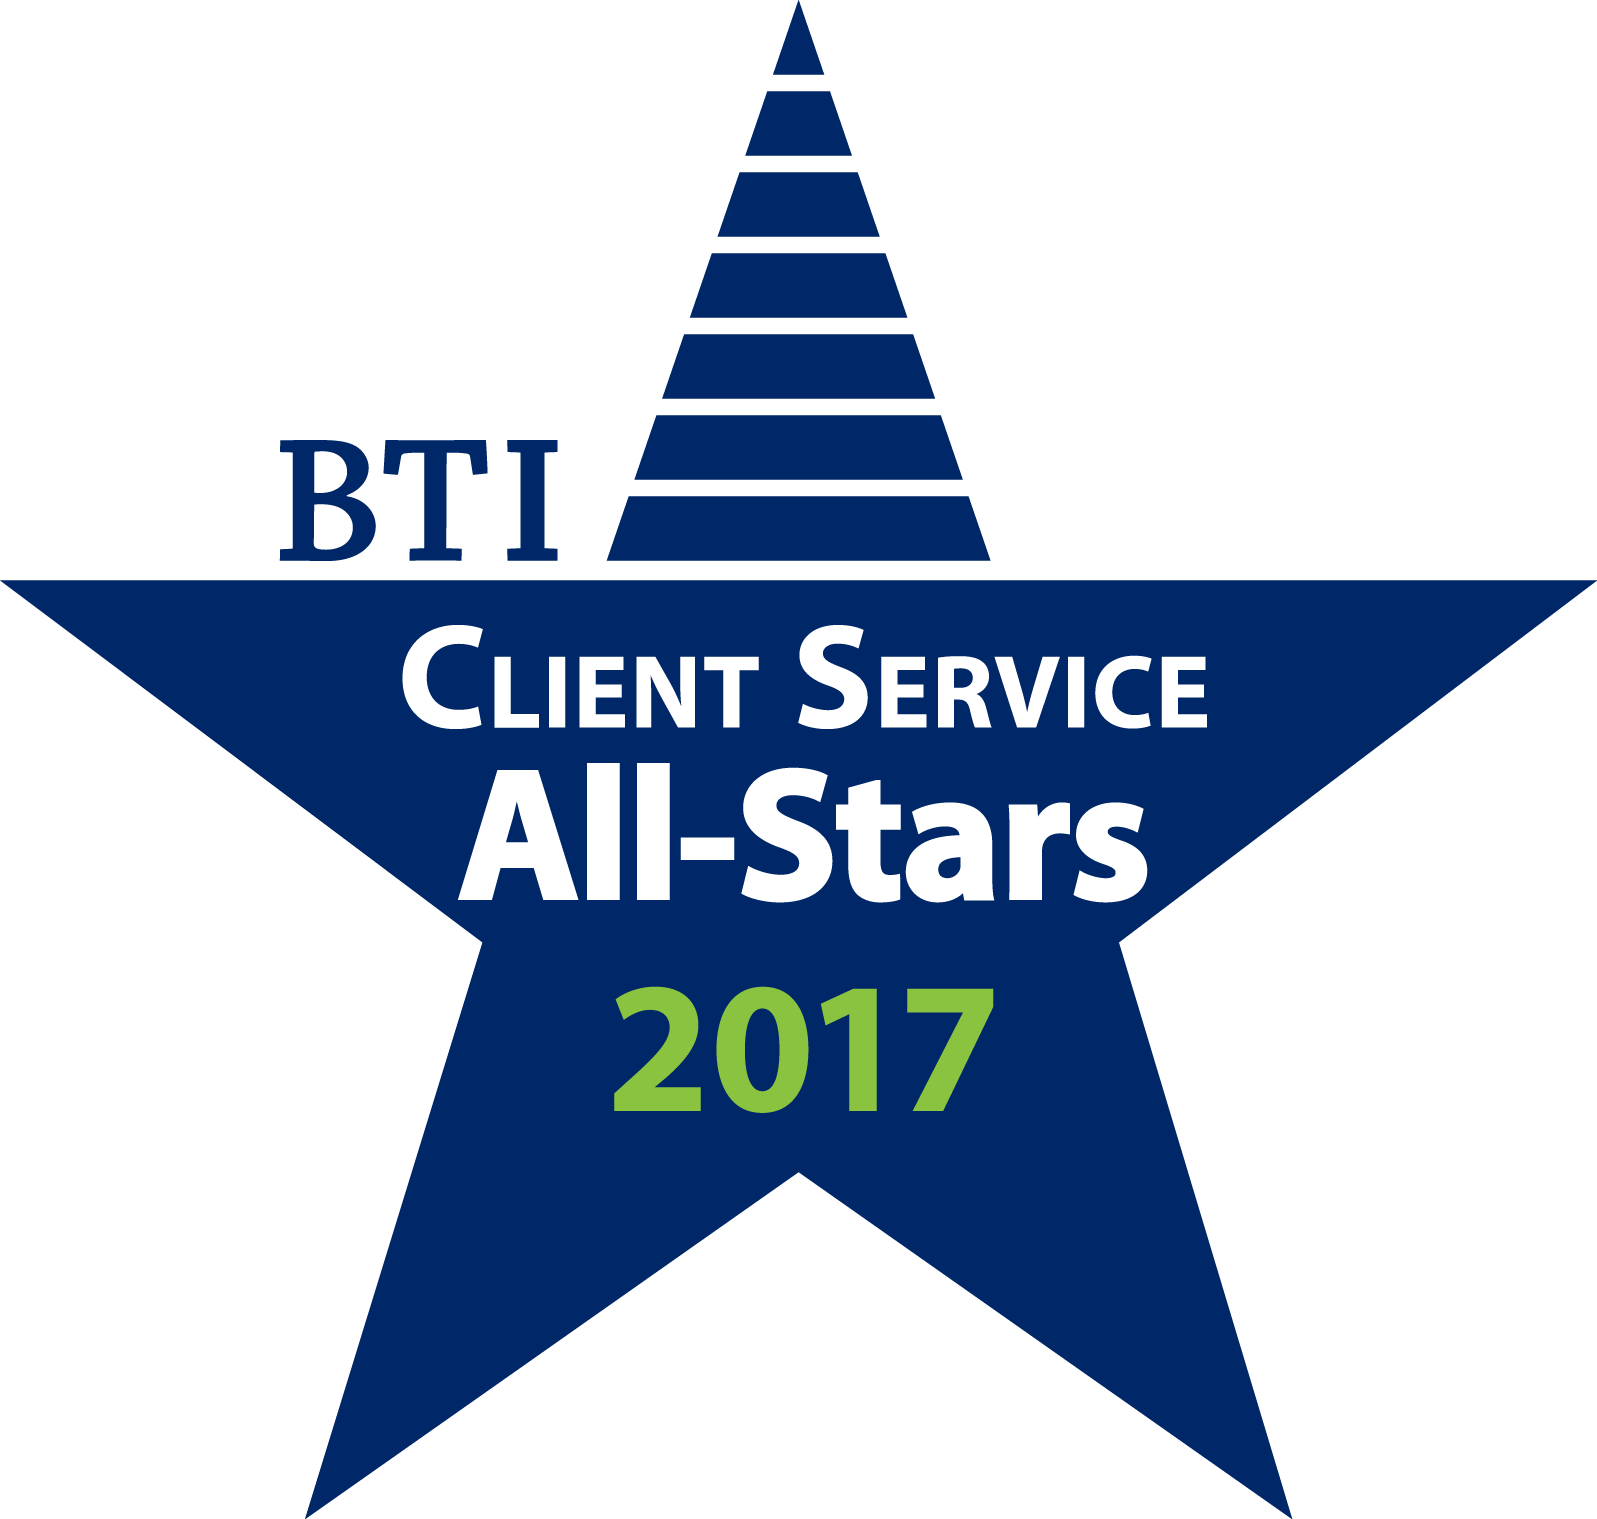 BTI Client Service All-Stars 2017